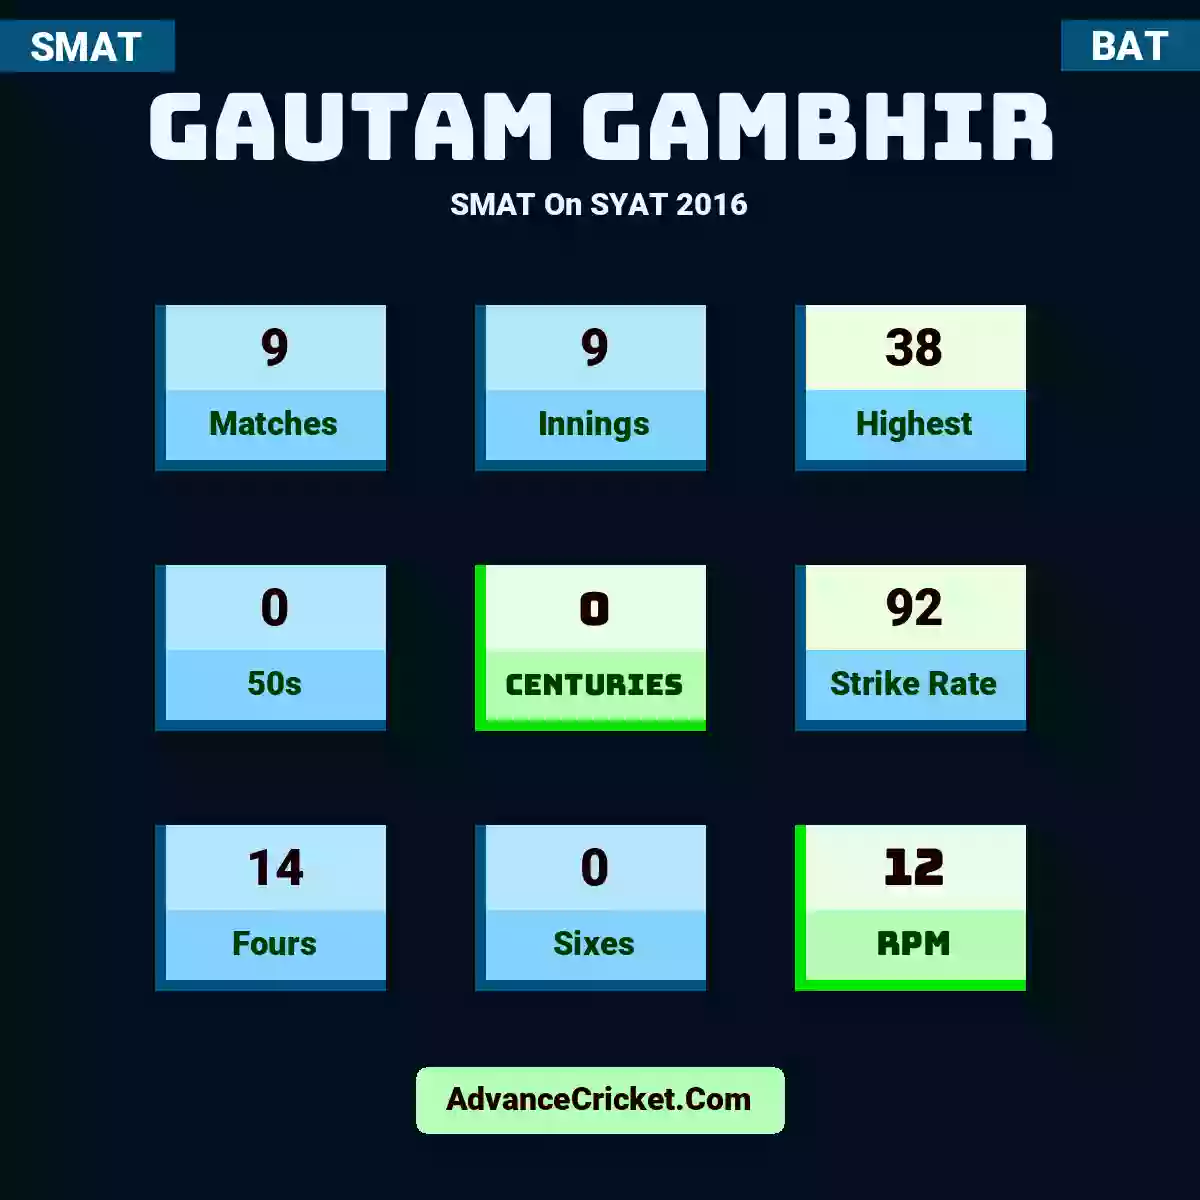 Gautam Gambhir SMAT  On SYAT 2016, Gautam Gambhir played 9 matches, scored 38 runs as highest, 0 half-centuries, and 0 centuries, with a strike rate of 92. G.Gambhir hit 14 fours and 0 sixes, with an RPM of 12.